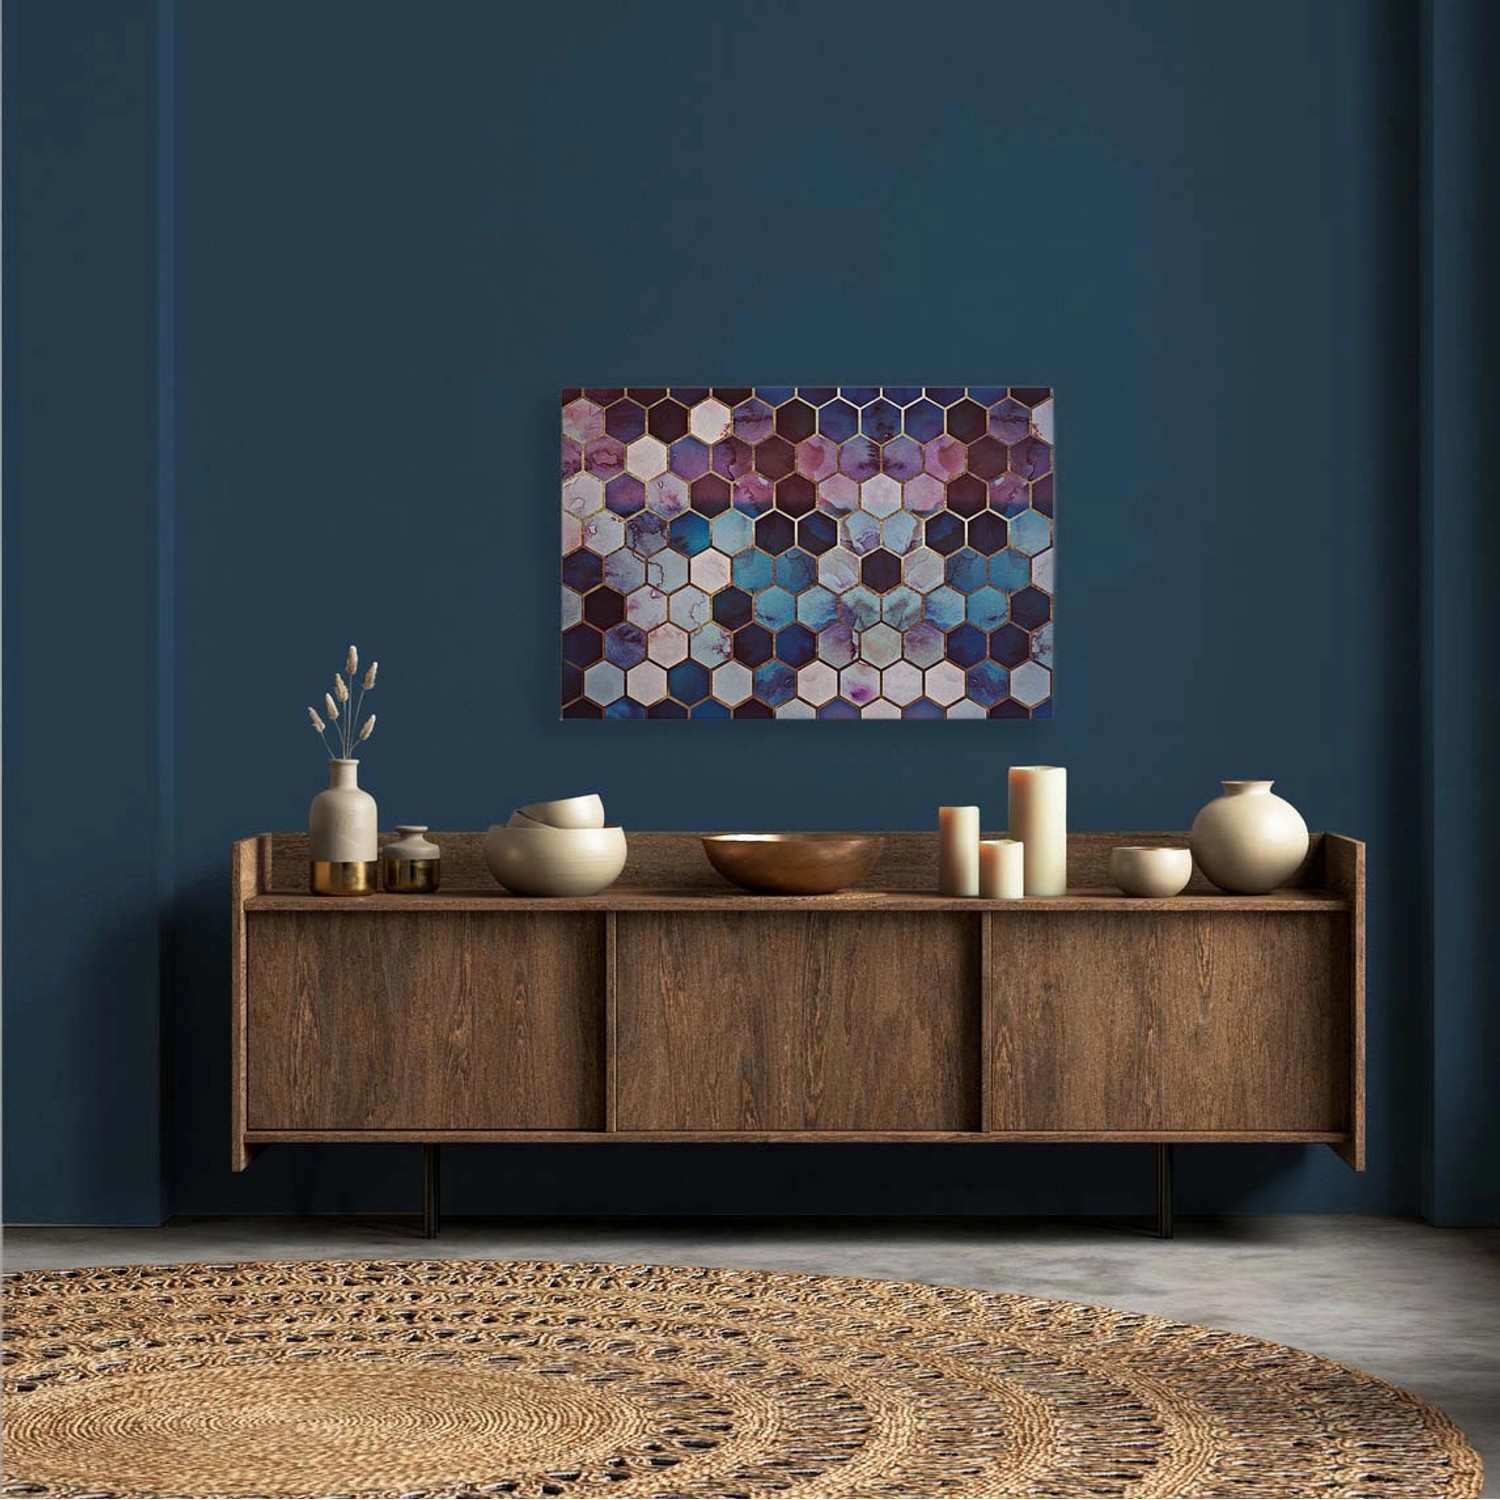 Bricoflor Wandbilder Mit Hexagon Muster Deko Leinwandbild In Aquarell Optik Marmor Bild In Lila Gold Für Schlafzimmer 12